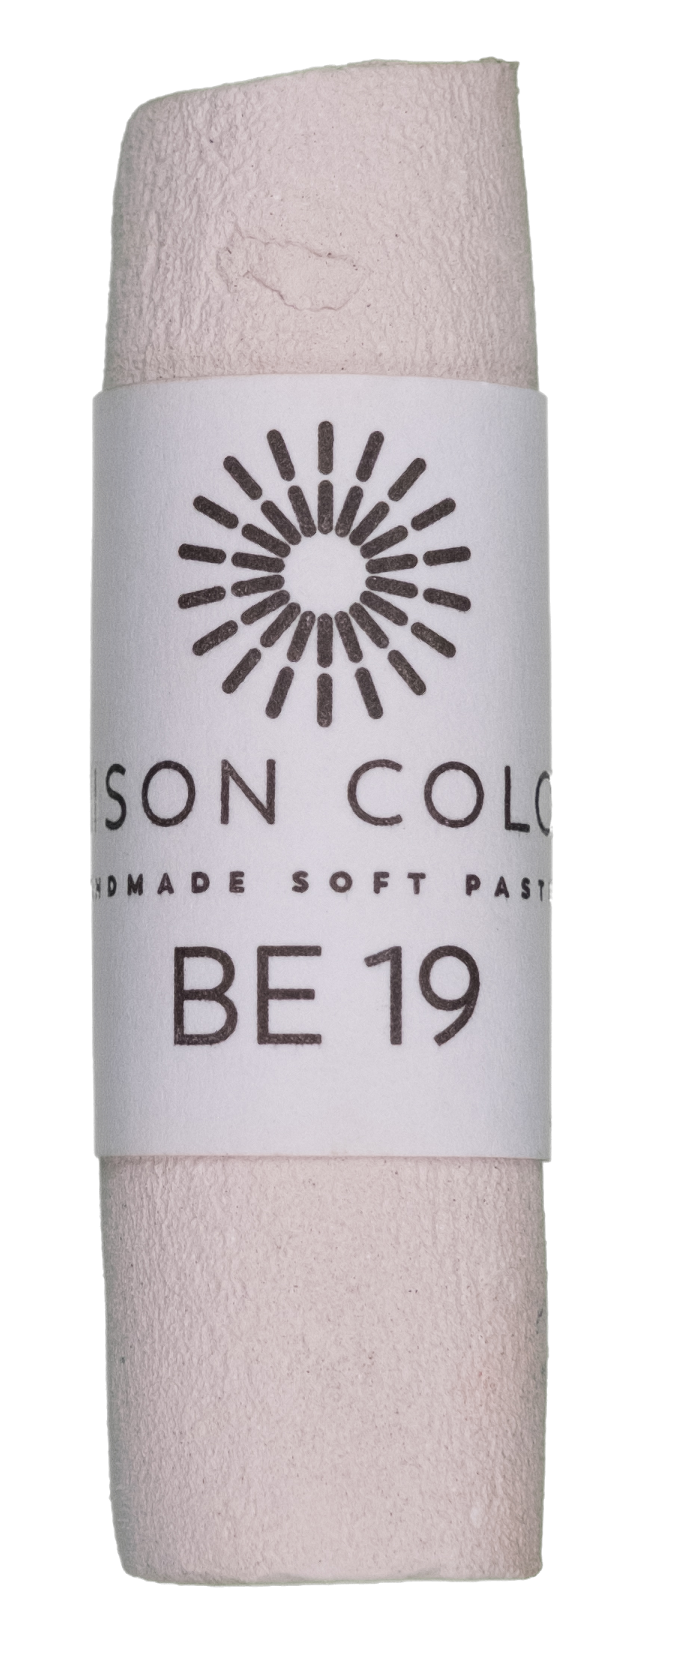 Unison Colour Handmade Soft Pastels Brown Earth 19 - Size Regular - 0